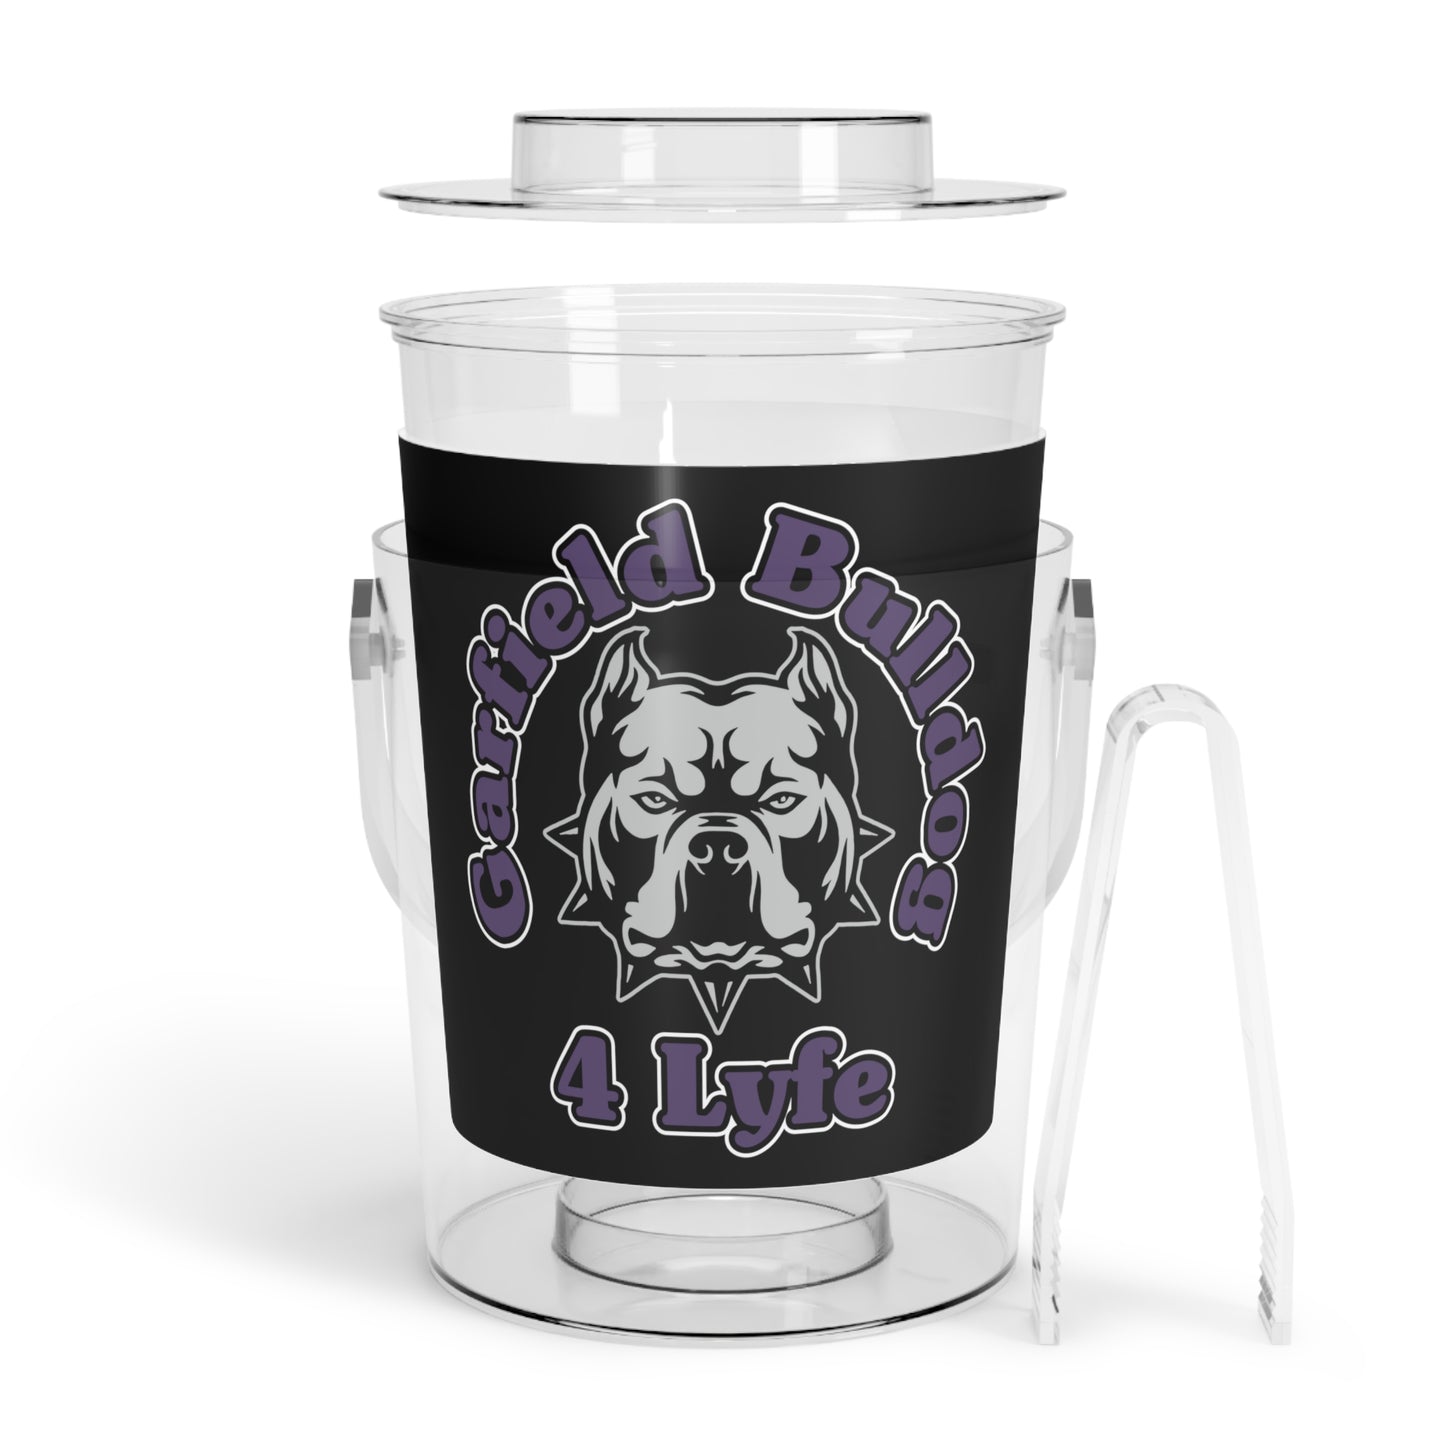 Garfield Bulldog 4 Lyfe Custom Ice Bucket with Tongs